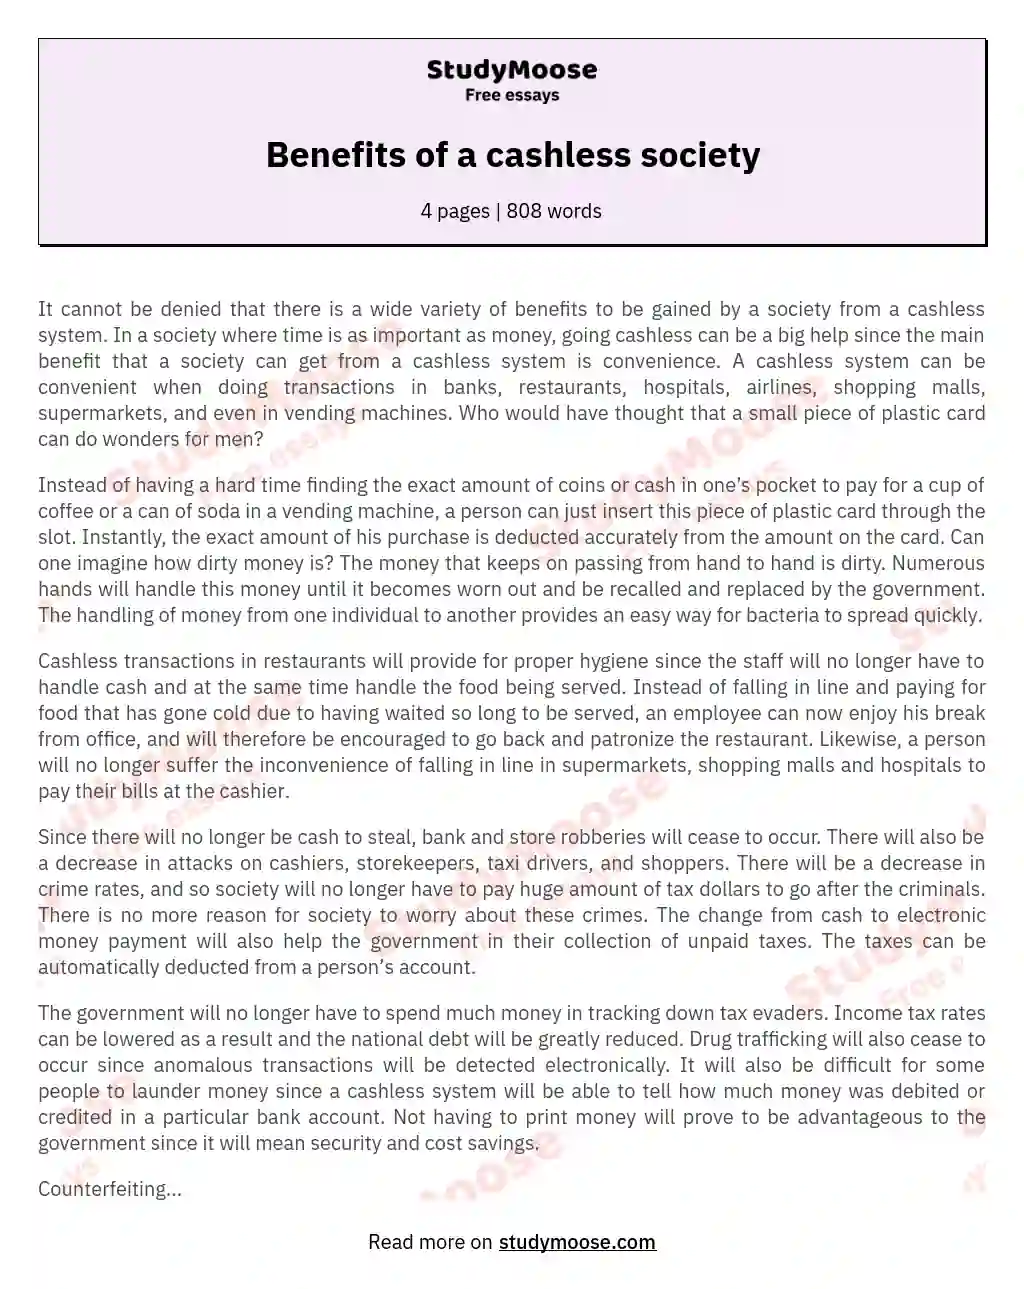 Benefits of a cashless society essay